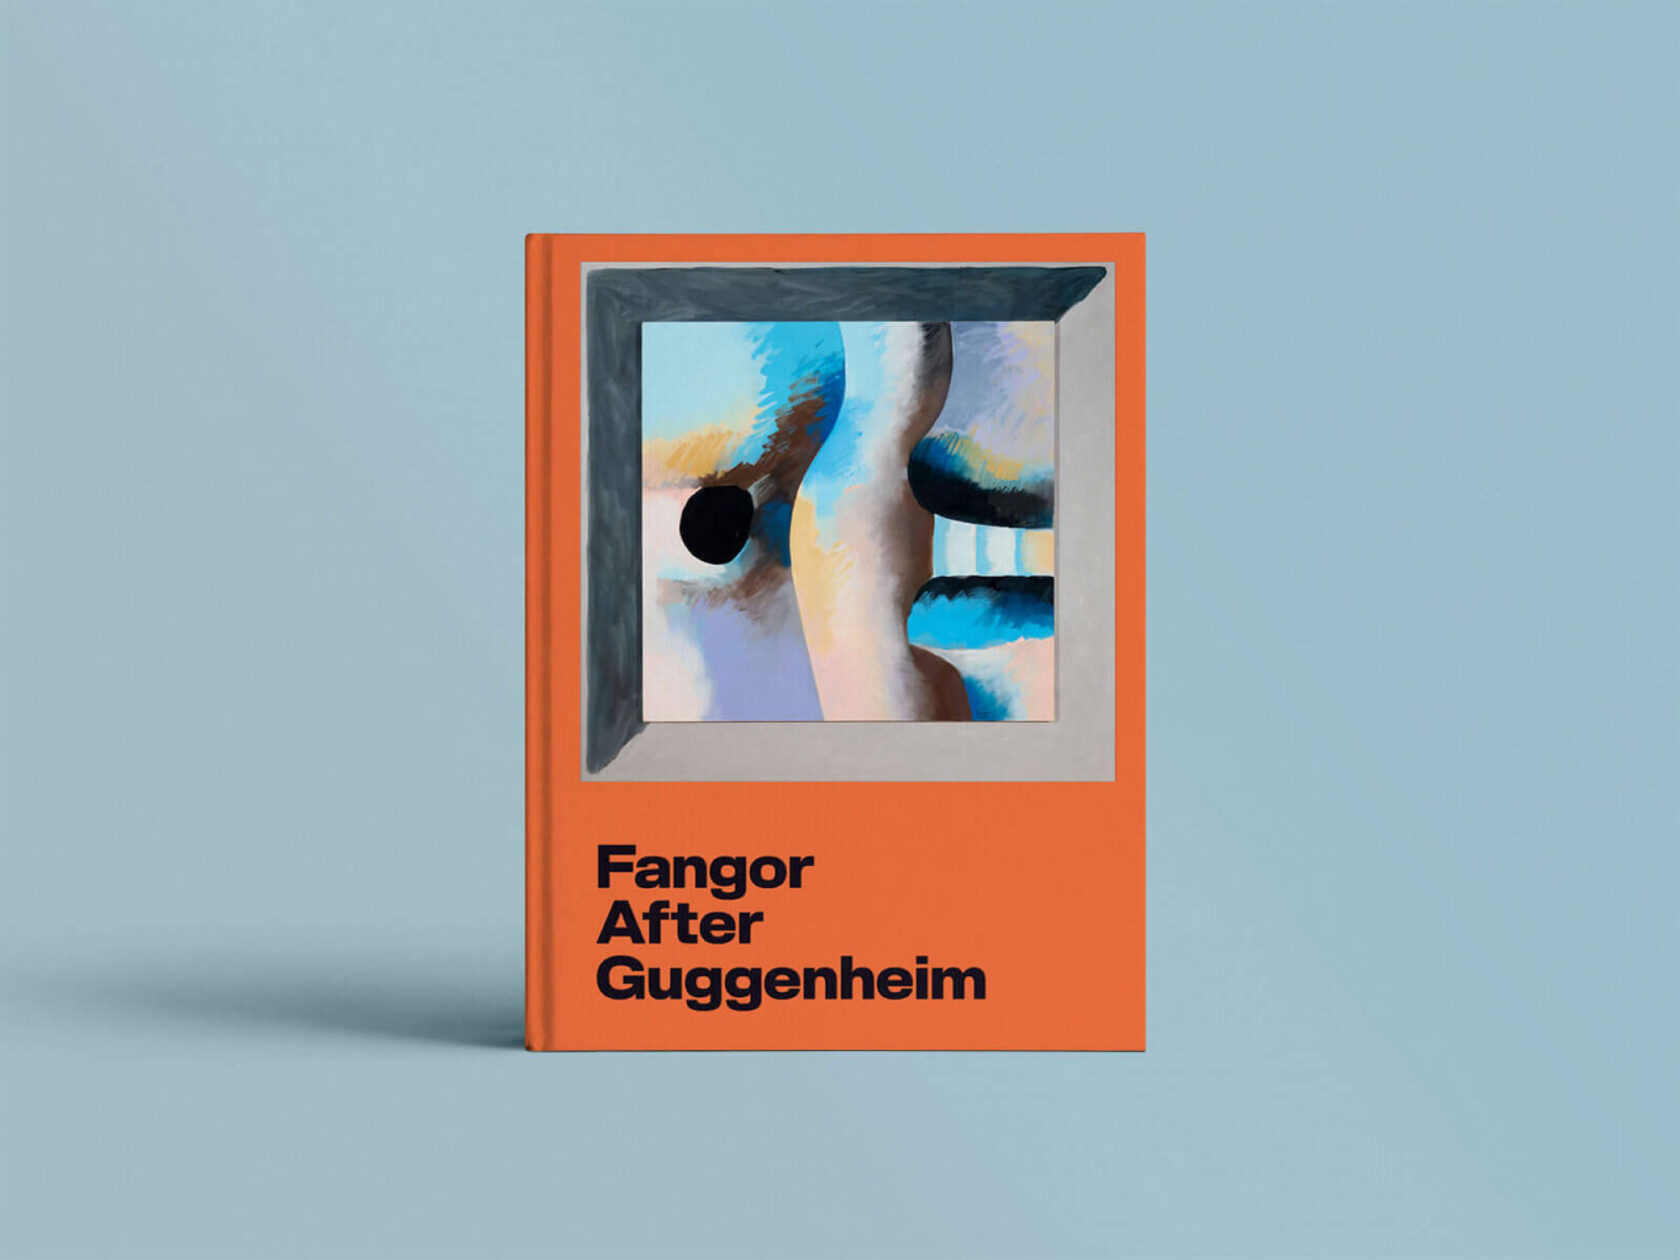 Premiere of the book “Fangor After Guggenheim”